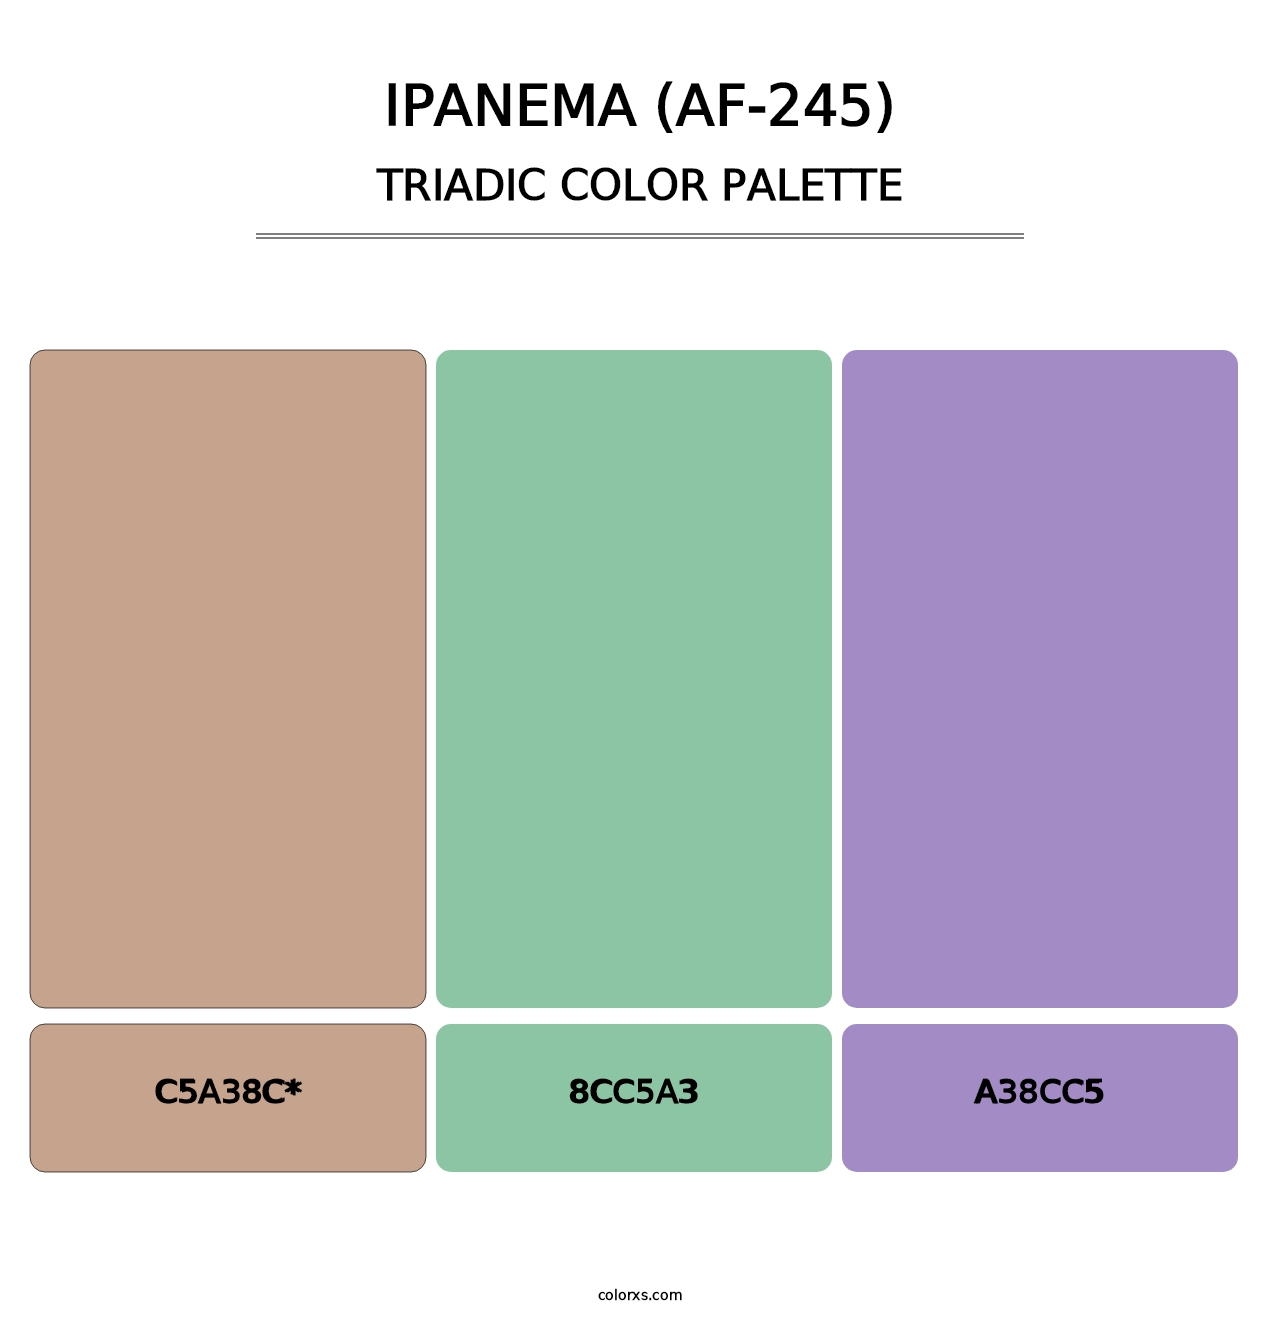 Ipanema (AF-245) - Triadic Color Palette